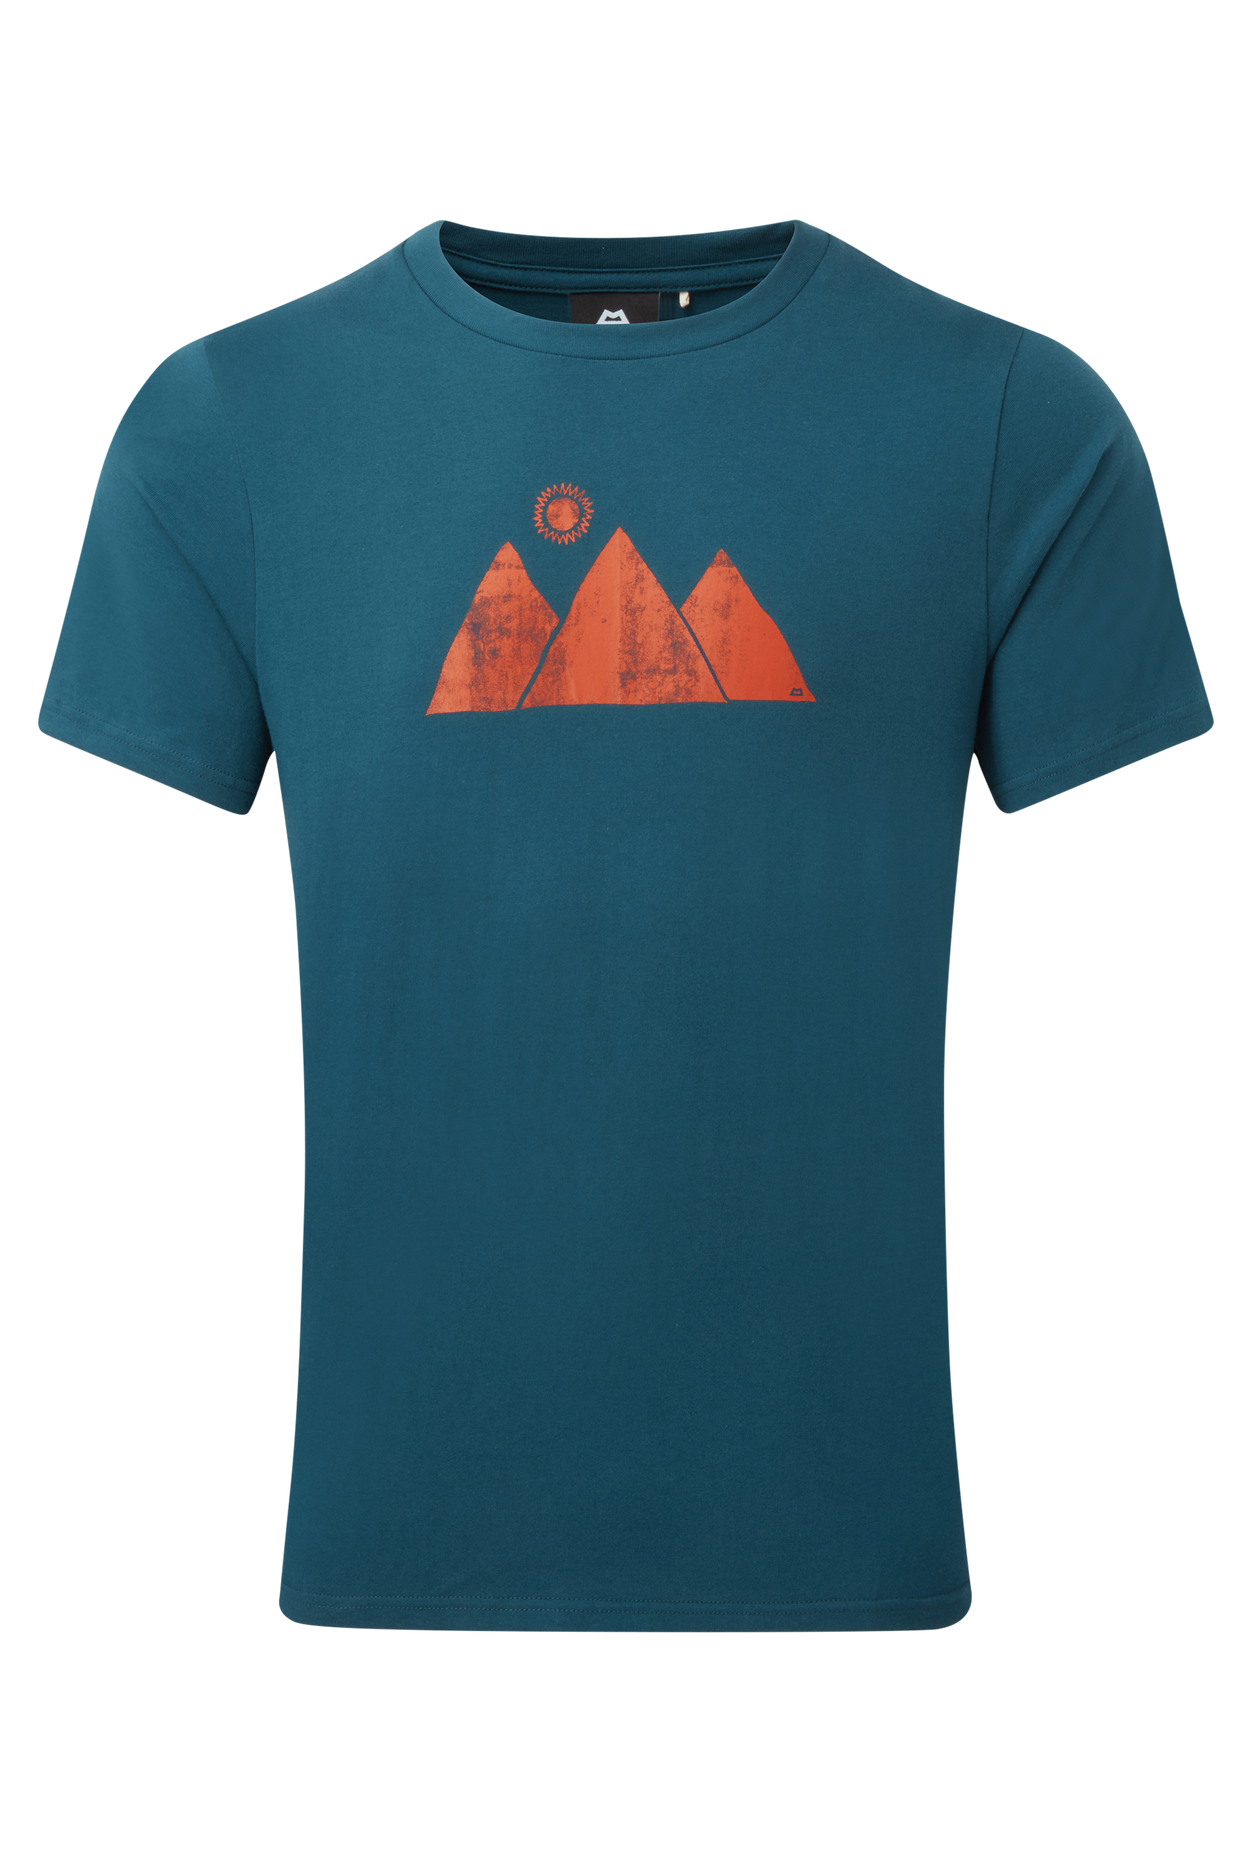 Mountain equipment pánské triko Mountain Sun Mens Tee Barva: Majolica Blue, Velikost: XL